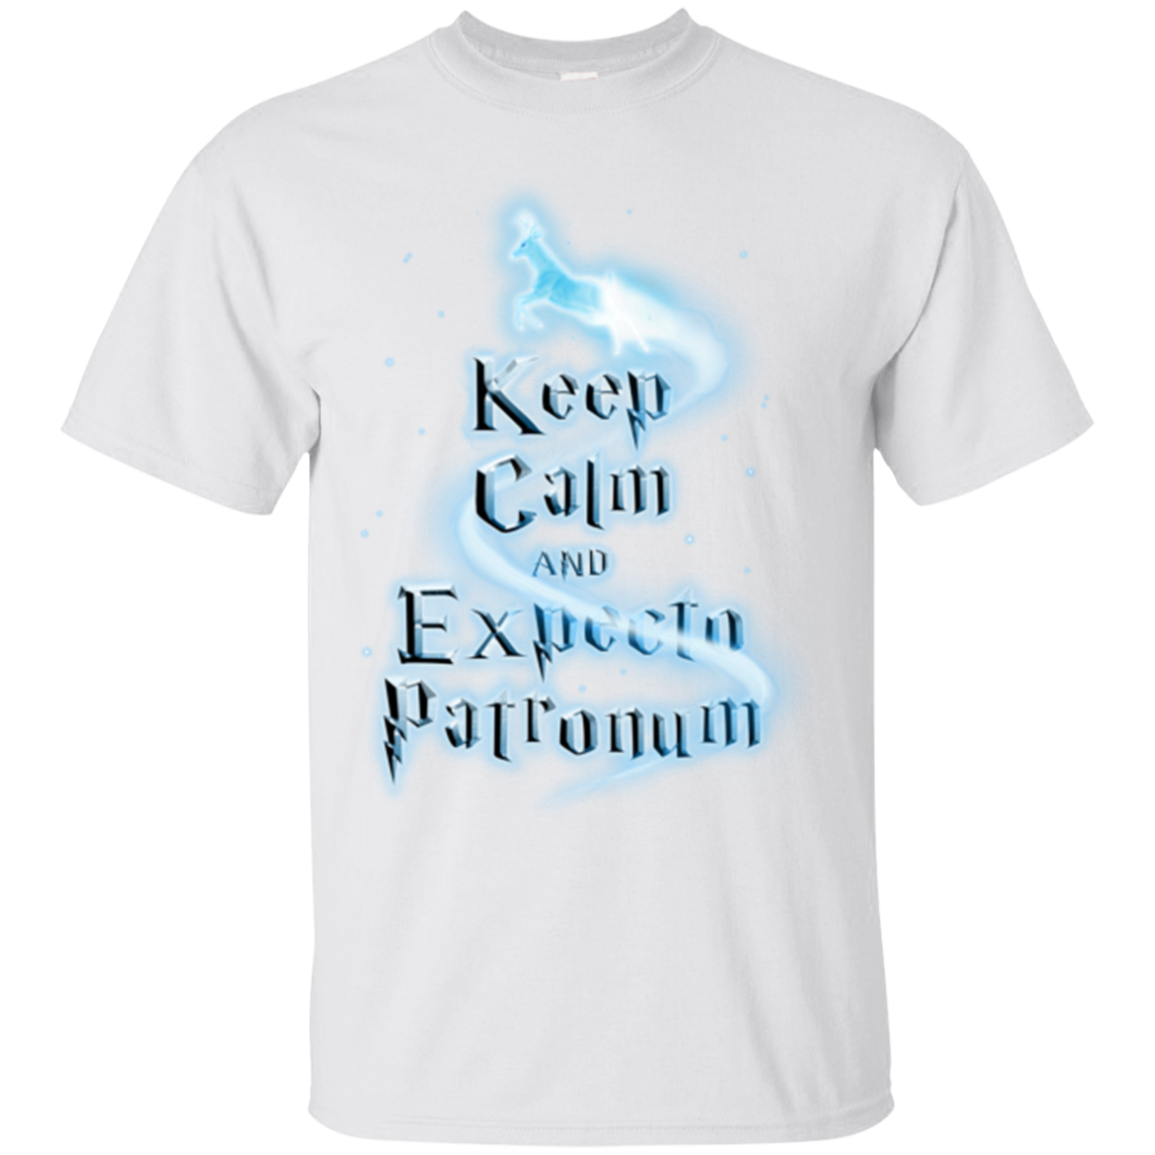 Keep Calm and Expecto Patronum T-Shirt